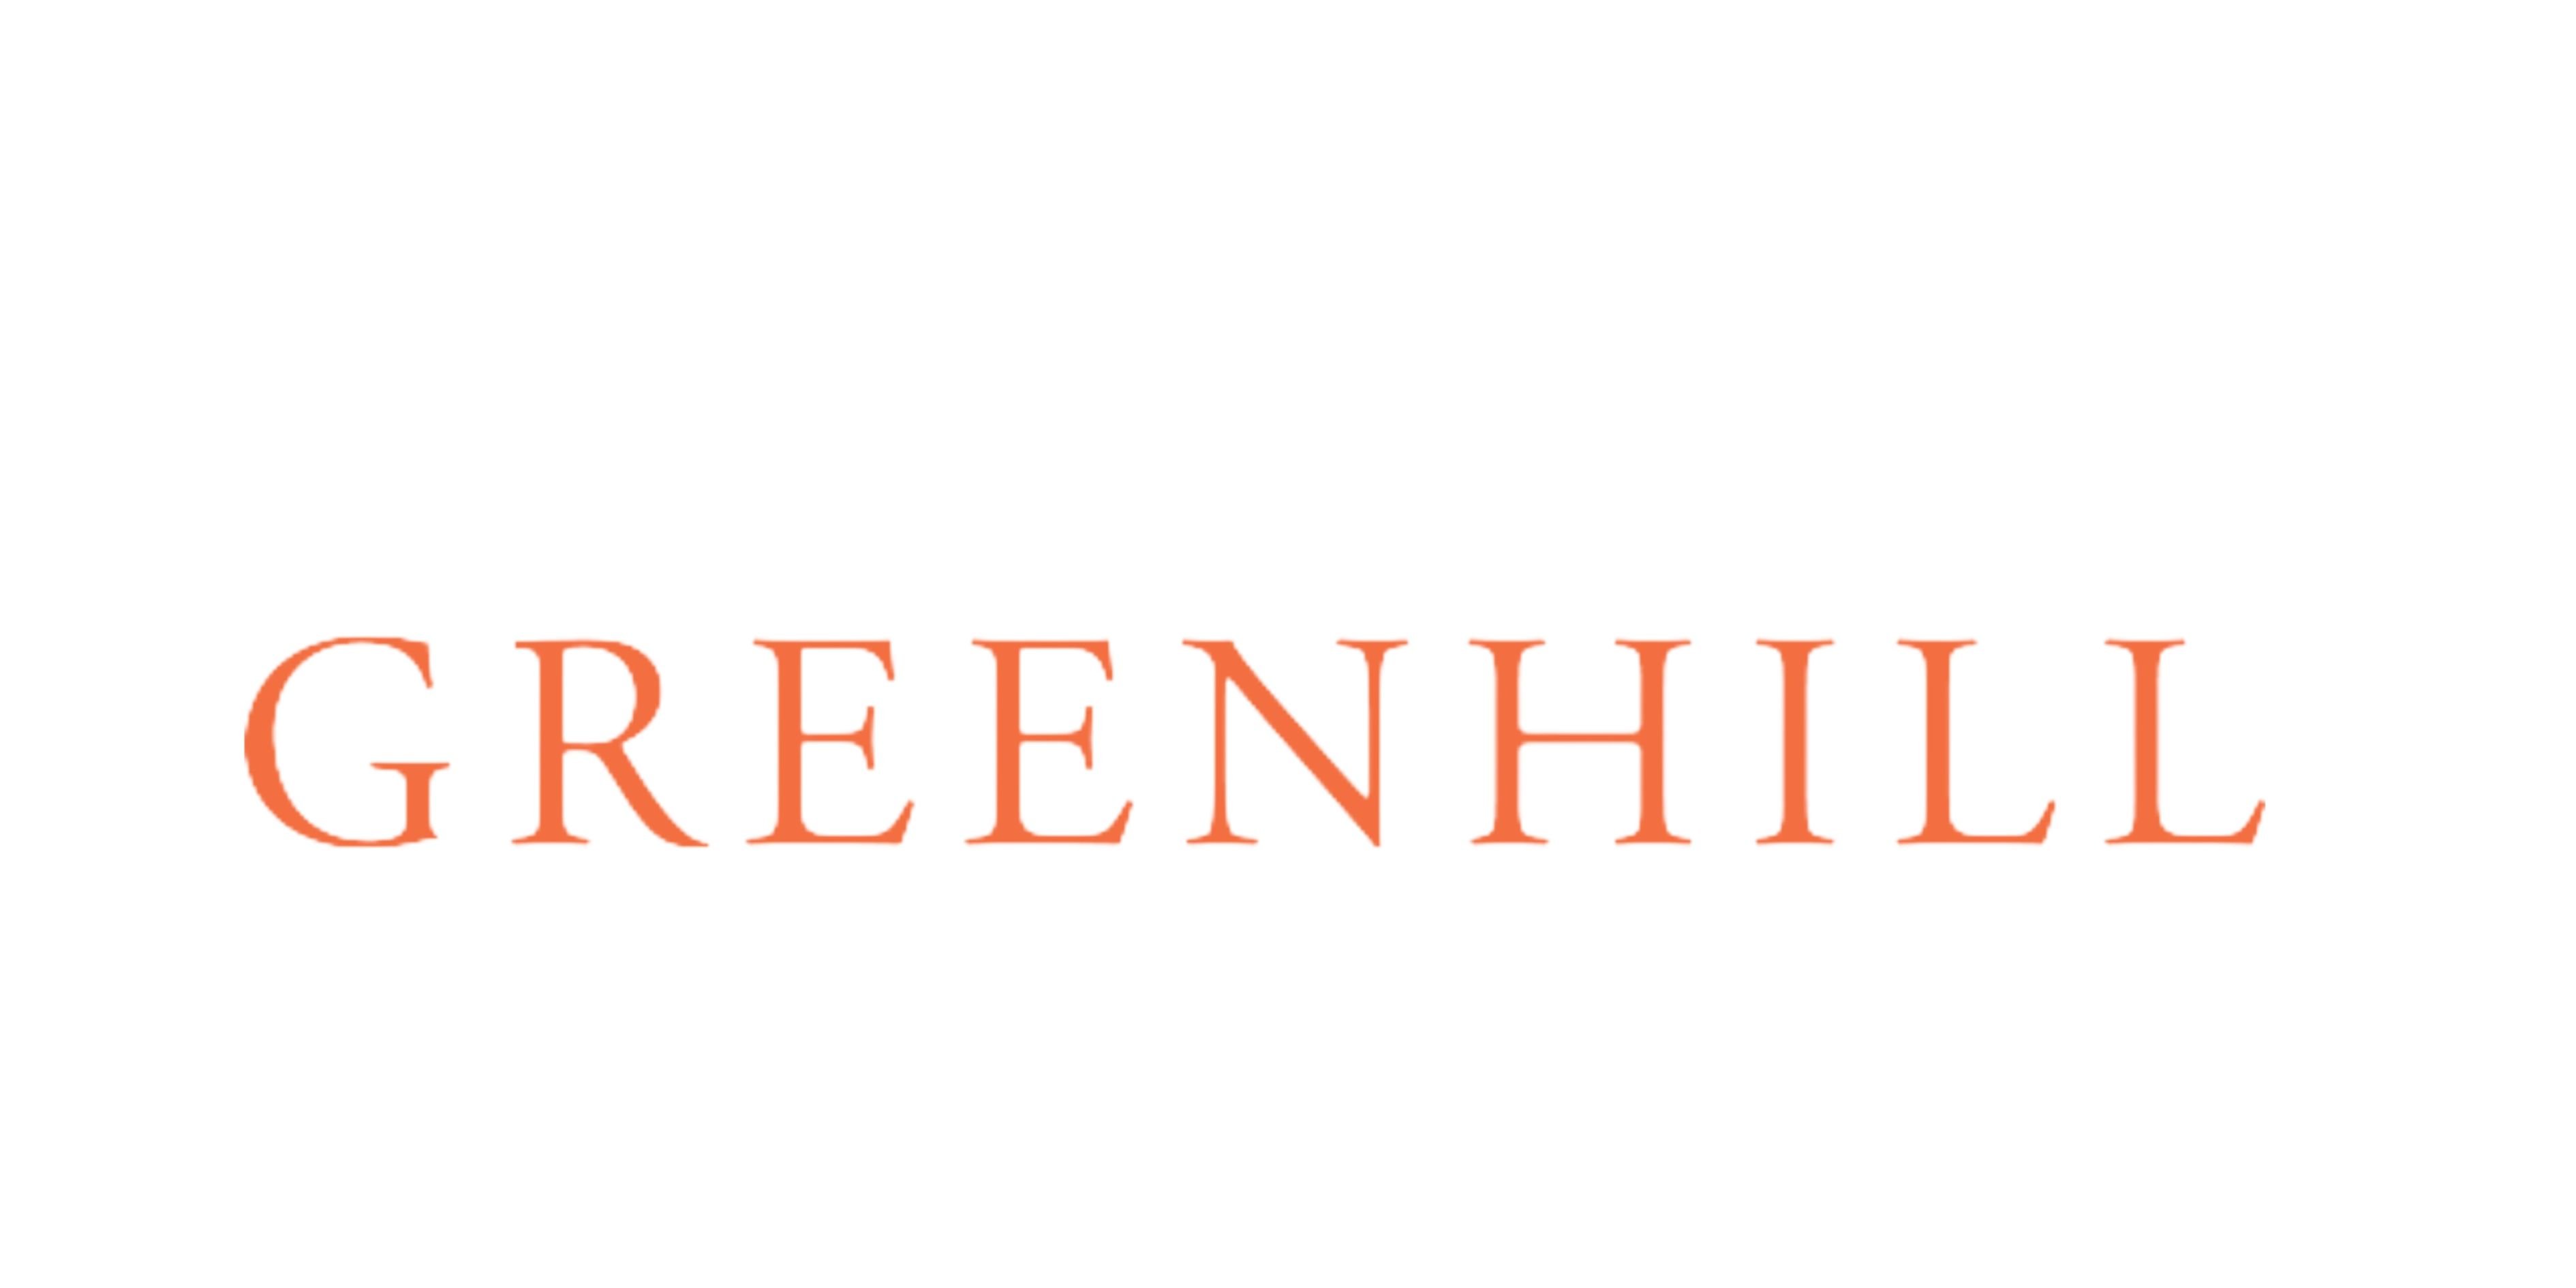 Greenhill Transparant-1